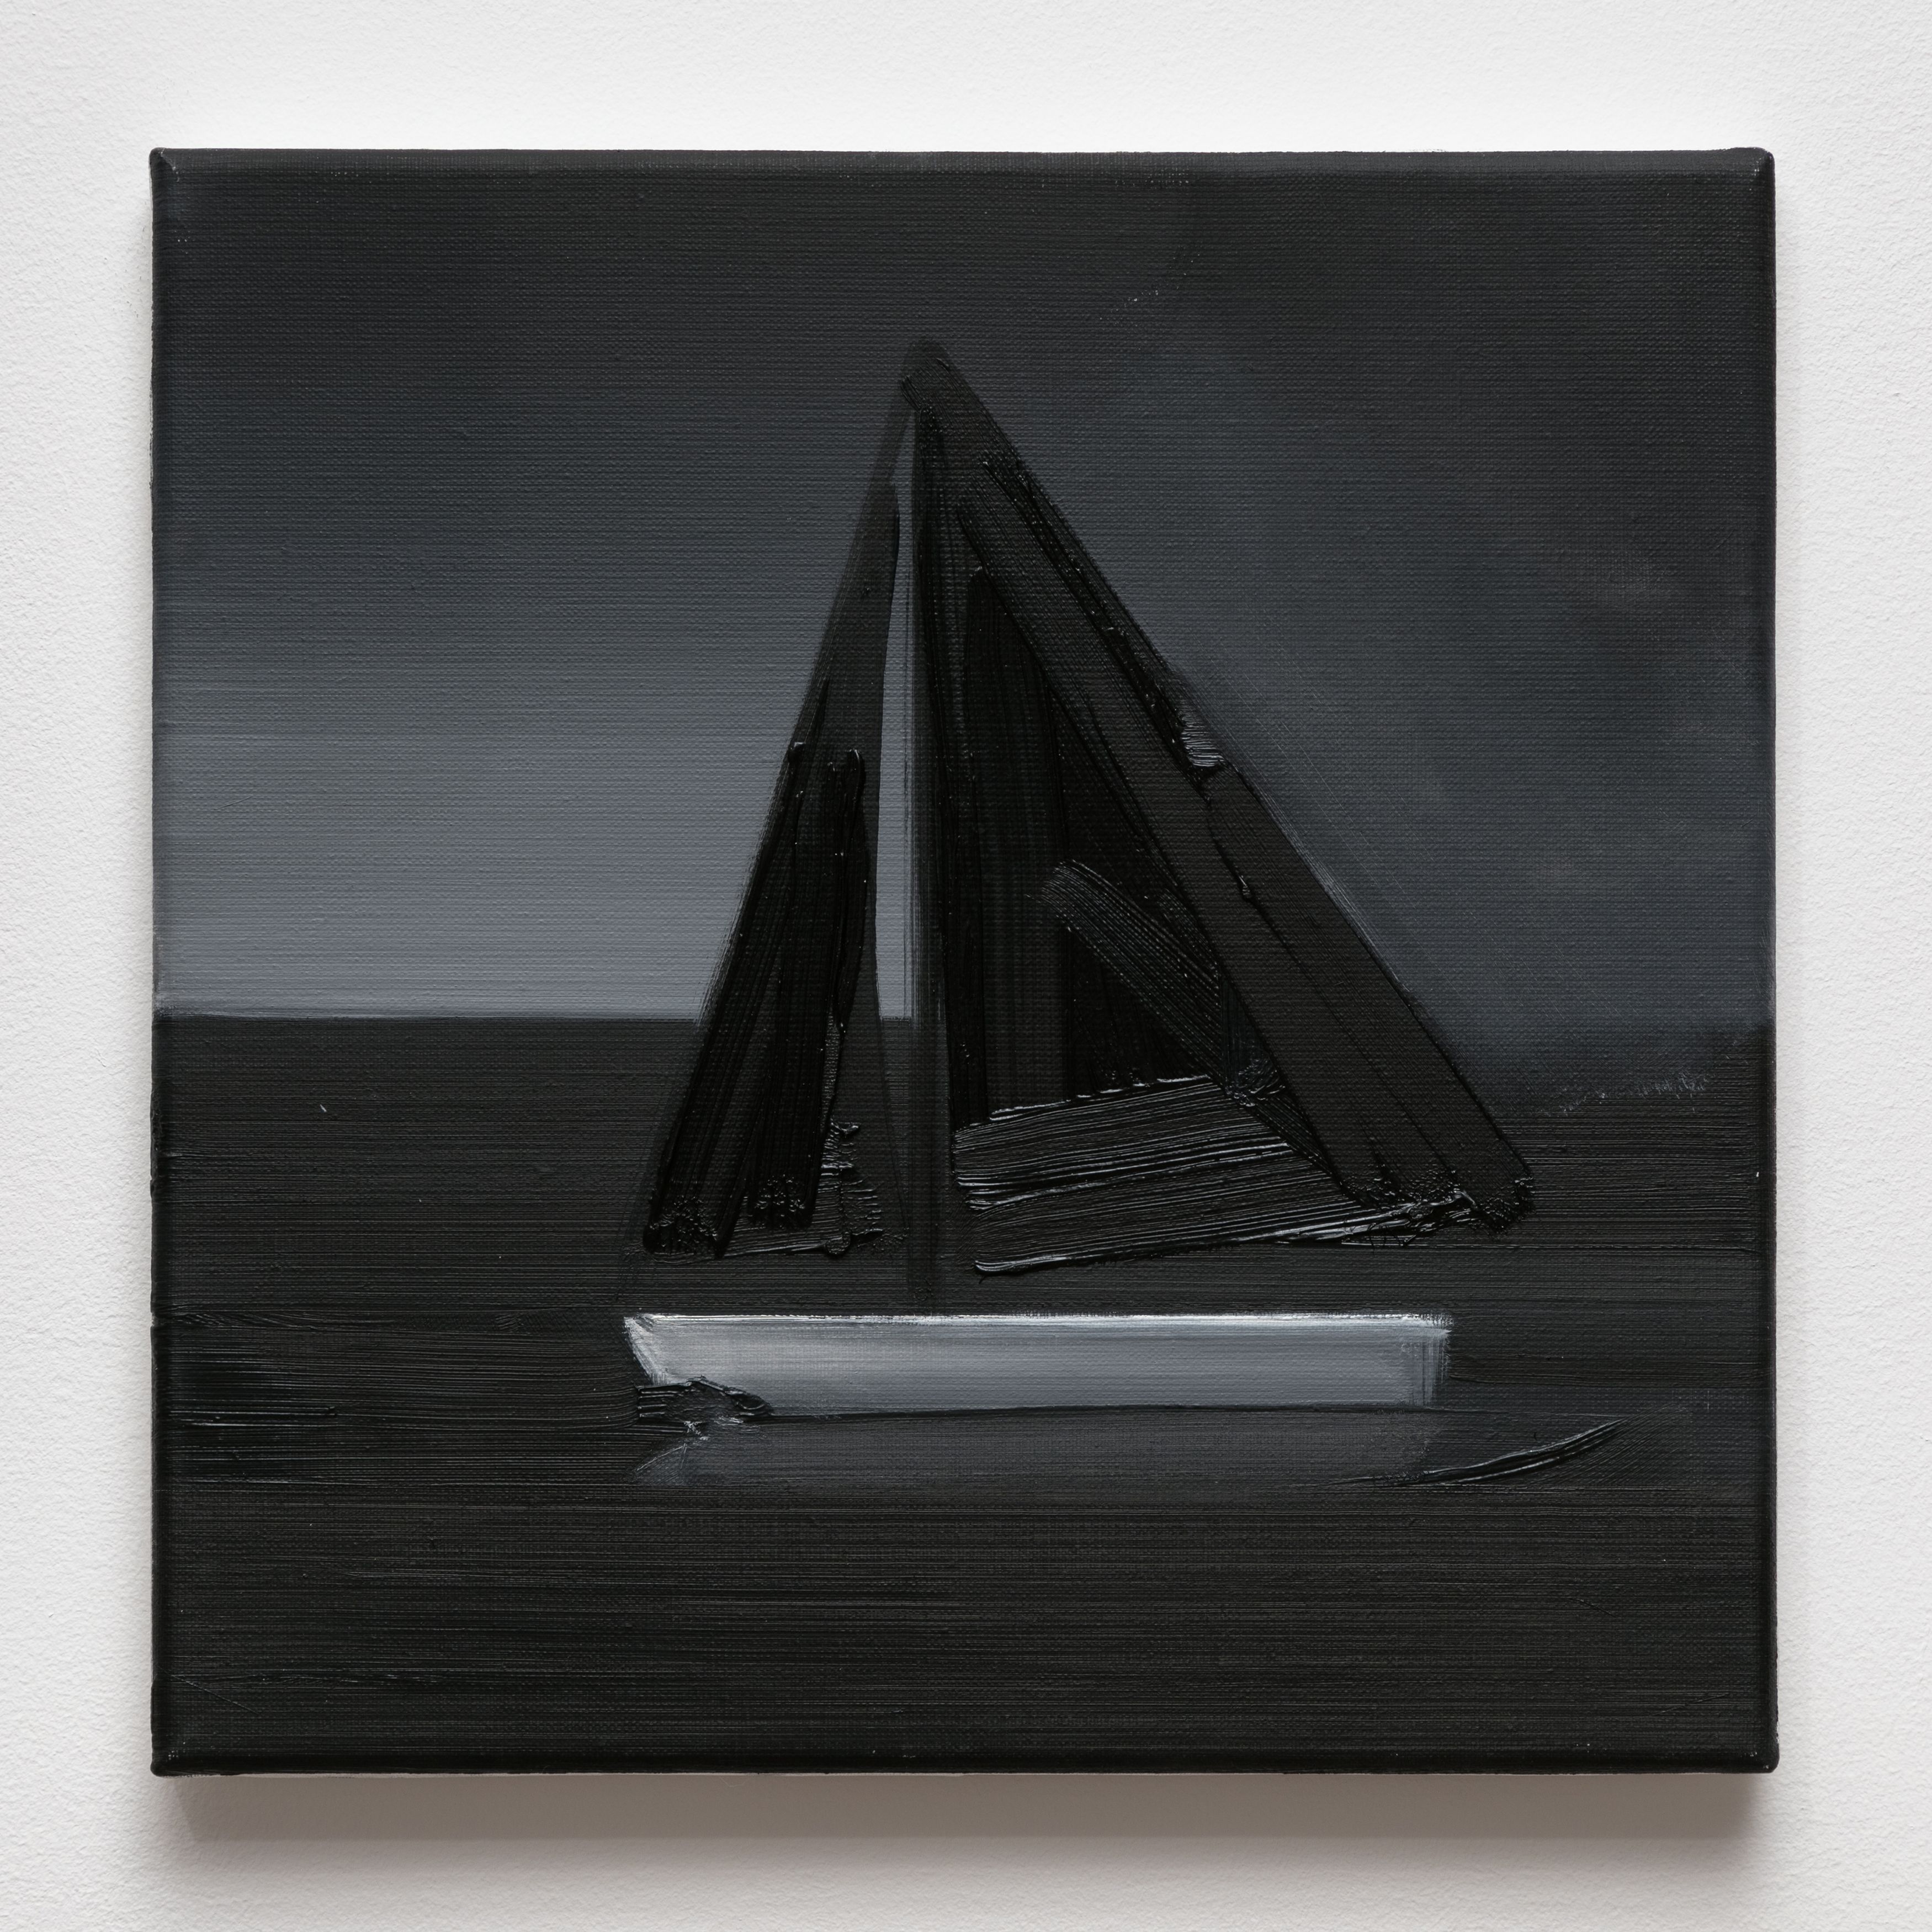 Rafal Bujnowski, The Last Day of Summer, 2019, oil on canvas, 14 7/8 x 14 7/8 in. (38 x 38 cm), RB_FP4131